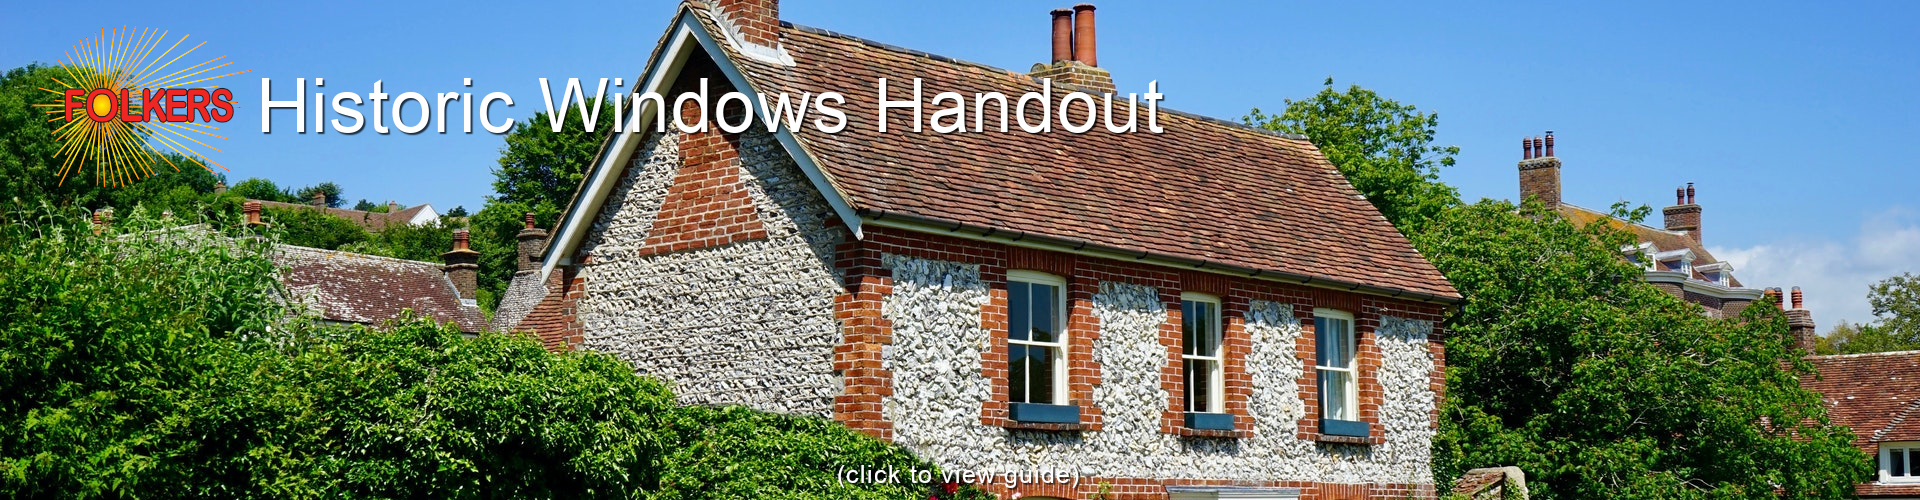 Folkers, Historic Windows Handout